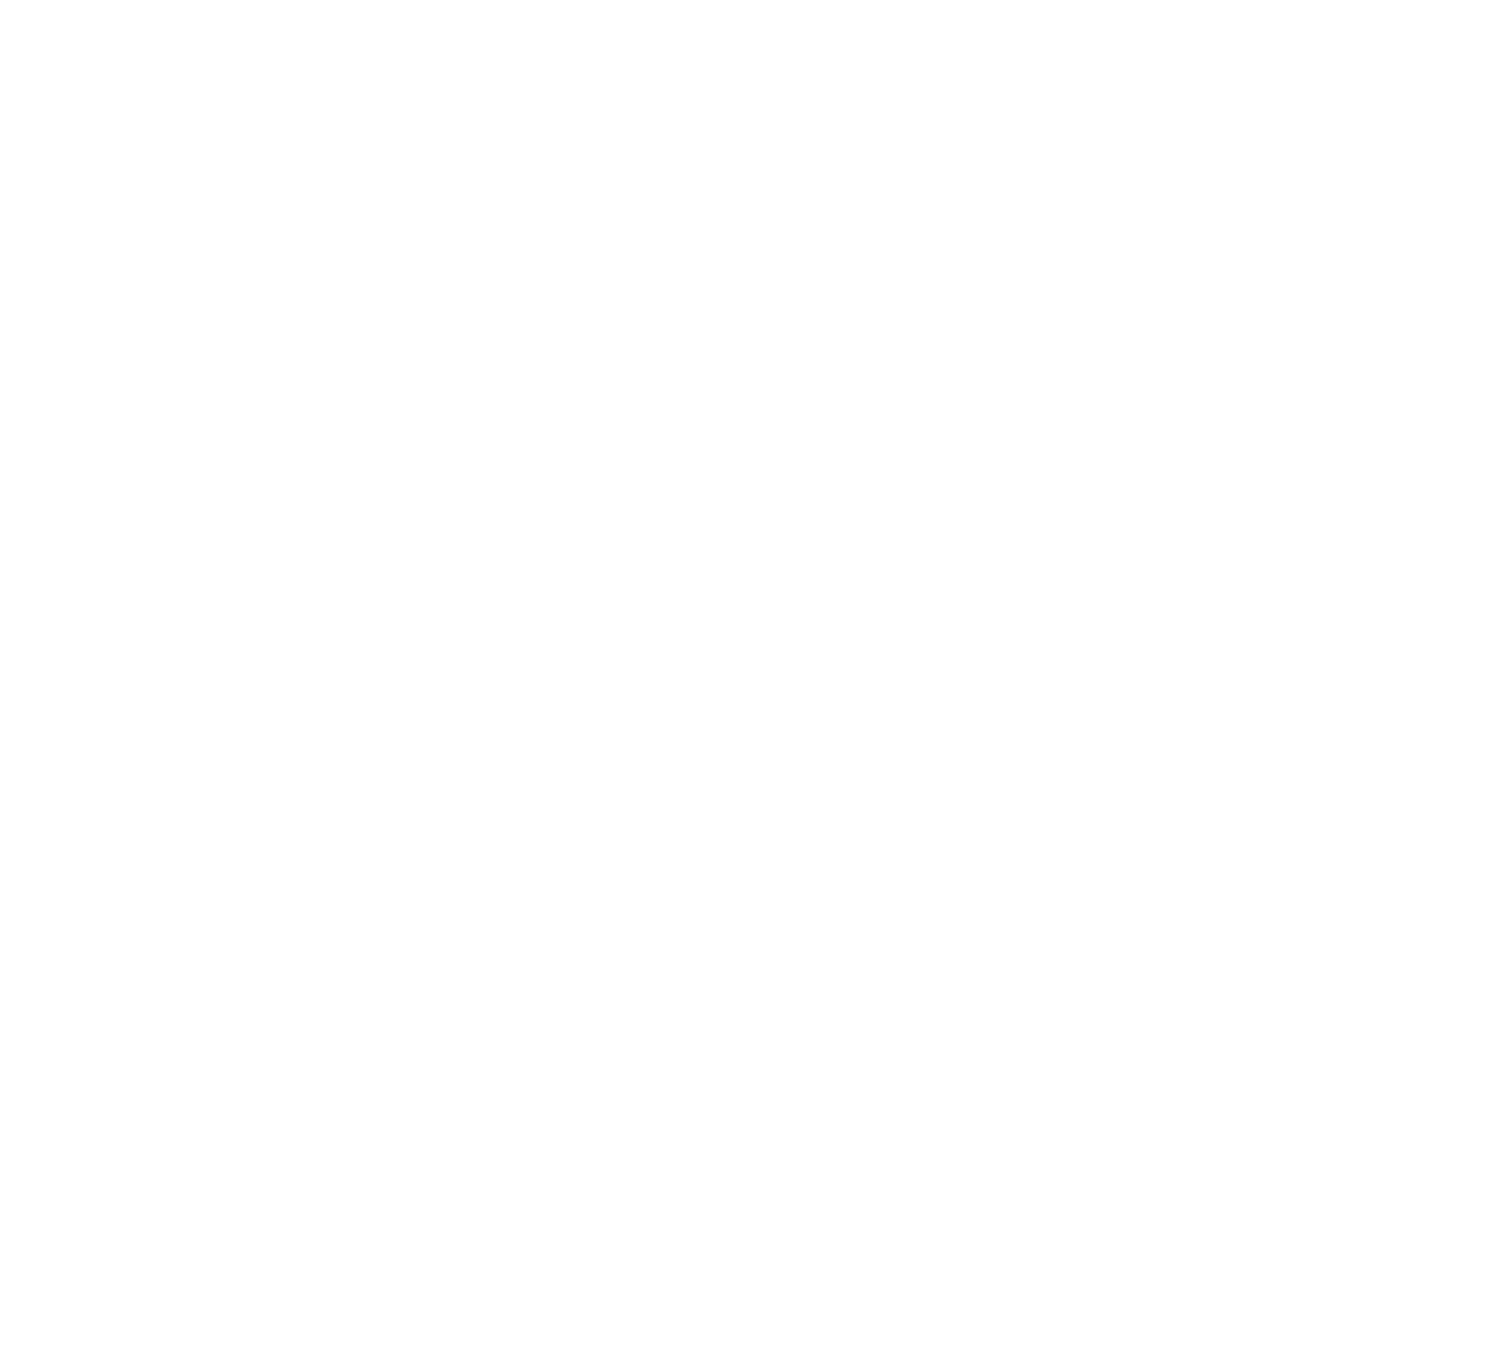 Authentically Arise